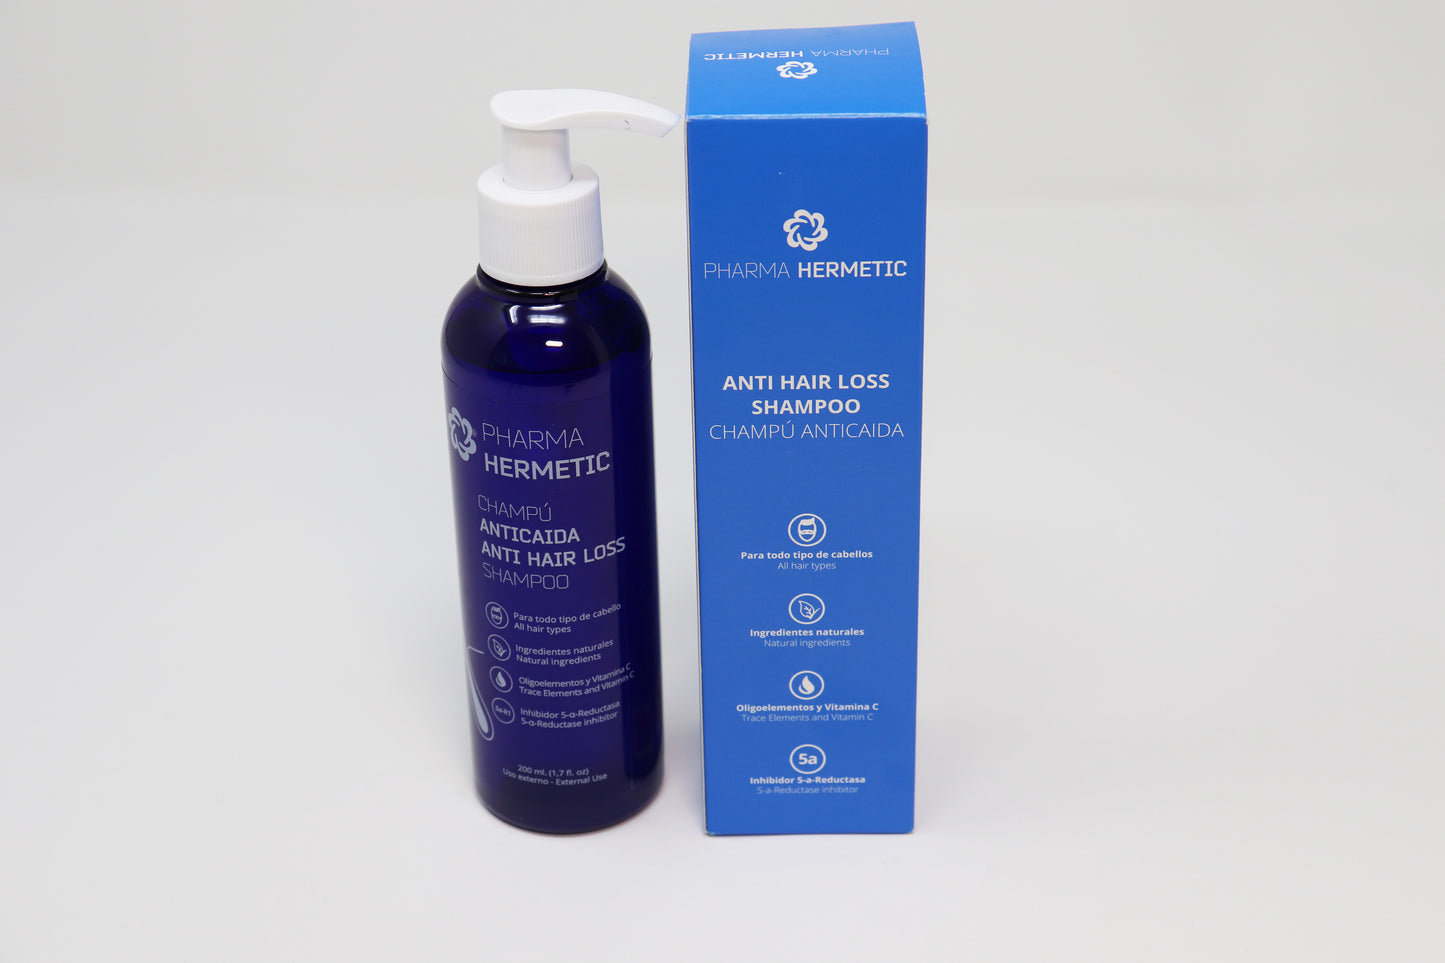 Pharma hermetic anti hair loss shampoo